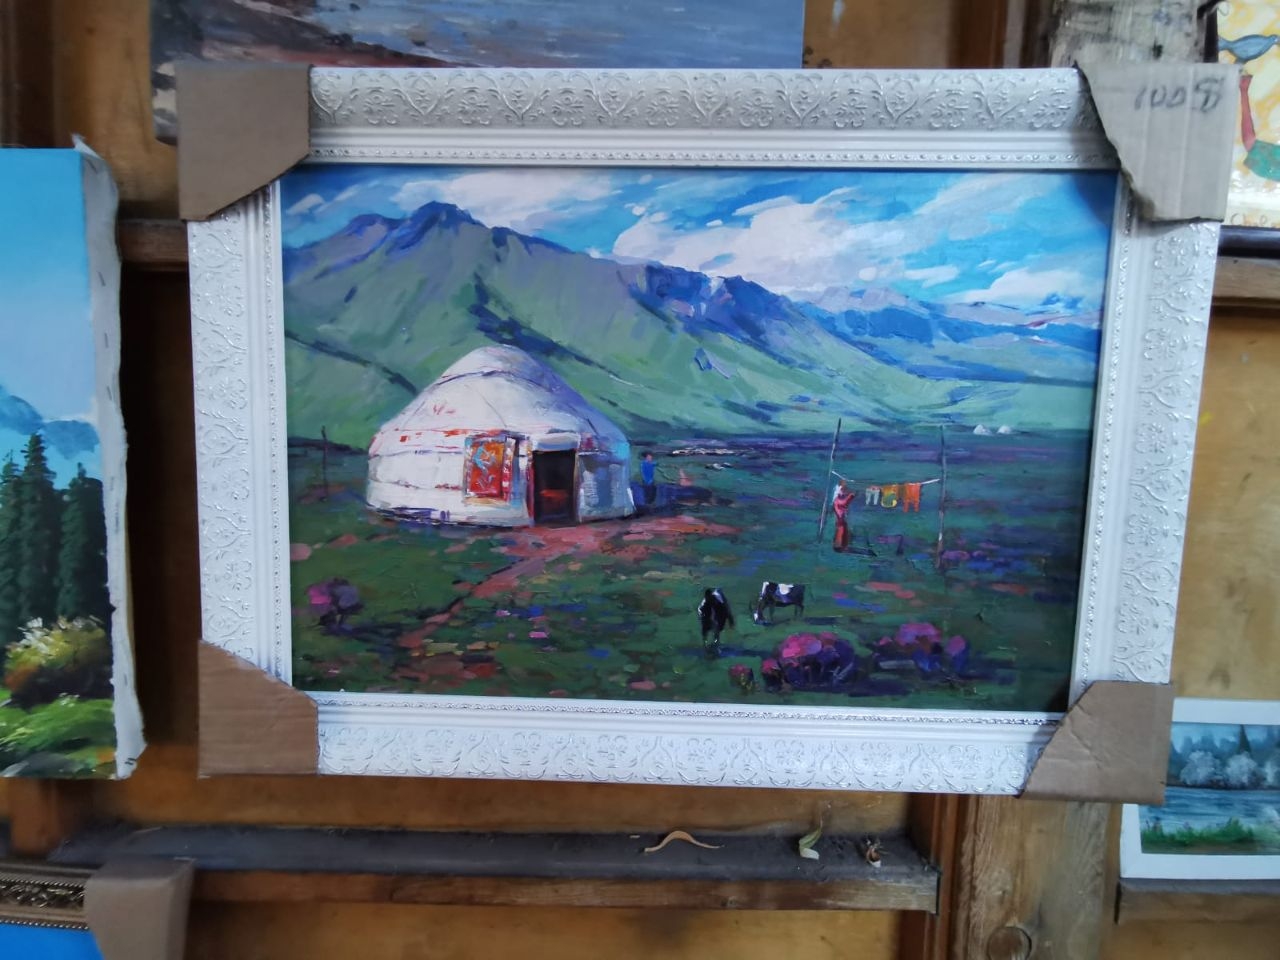 Бишкек: Биг Бен,кони,ЦУМ,картинная галерея,Ошский рынок.Ч93 Бишкек, Киргизия